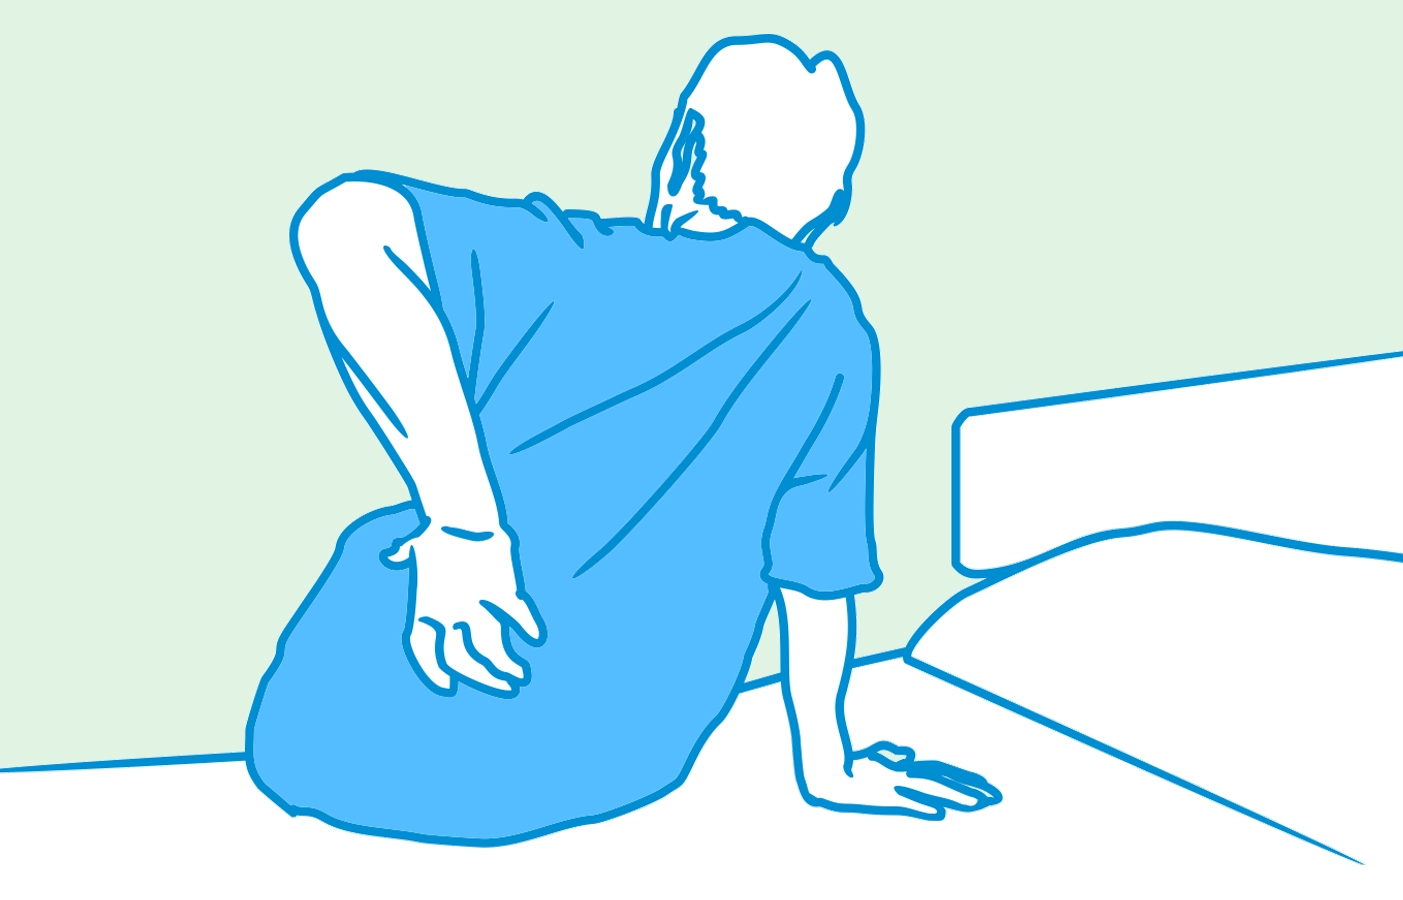 Edges of the mattress, mattress for the elderly, orthopedic pillows